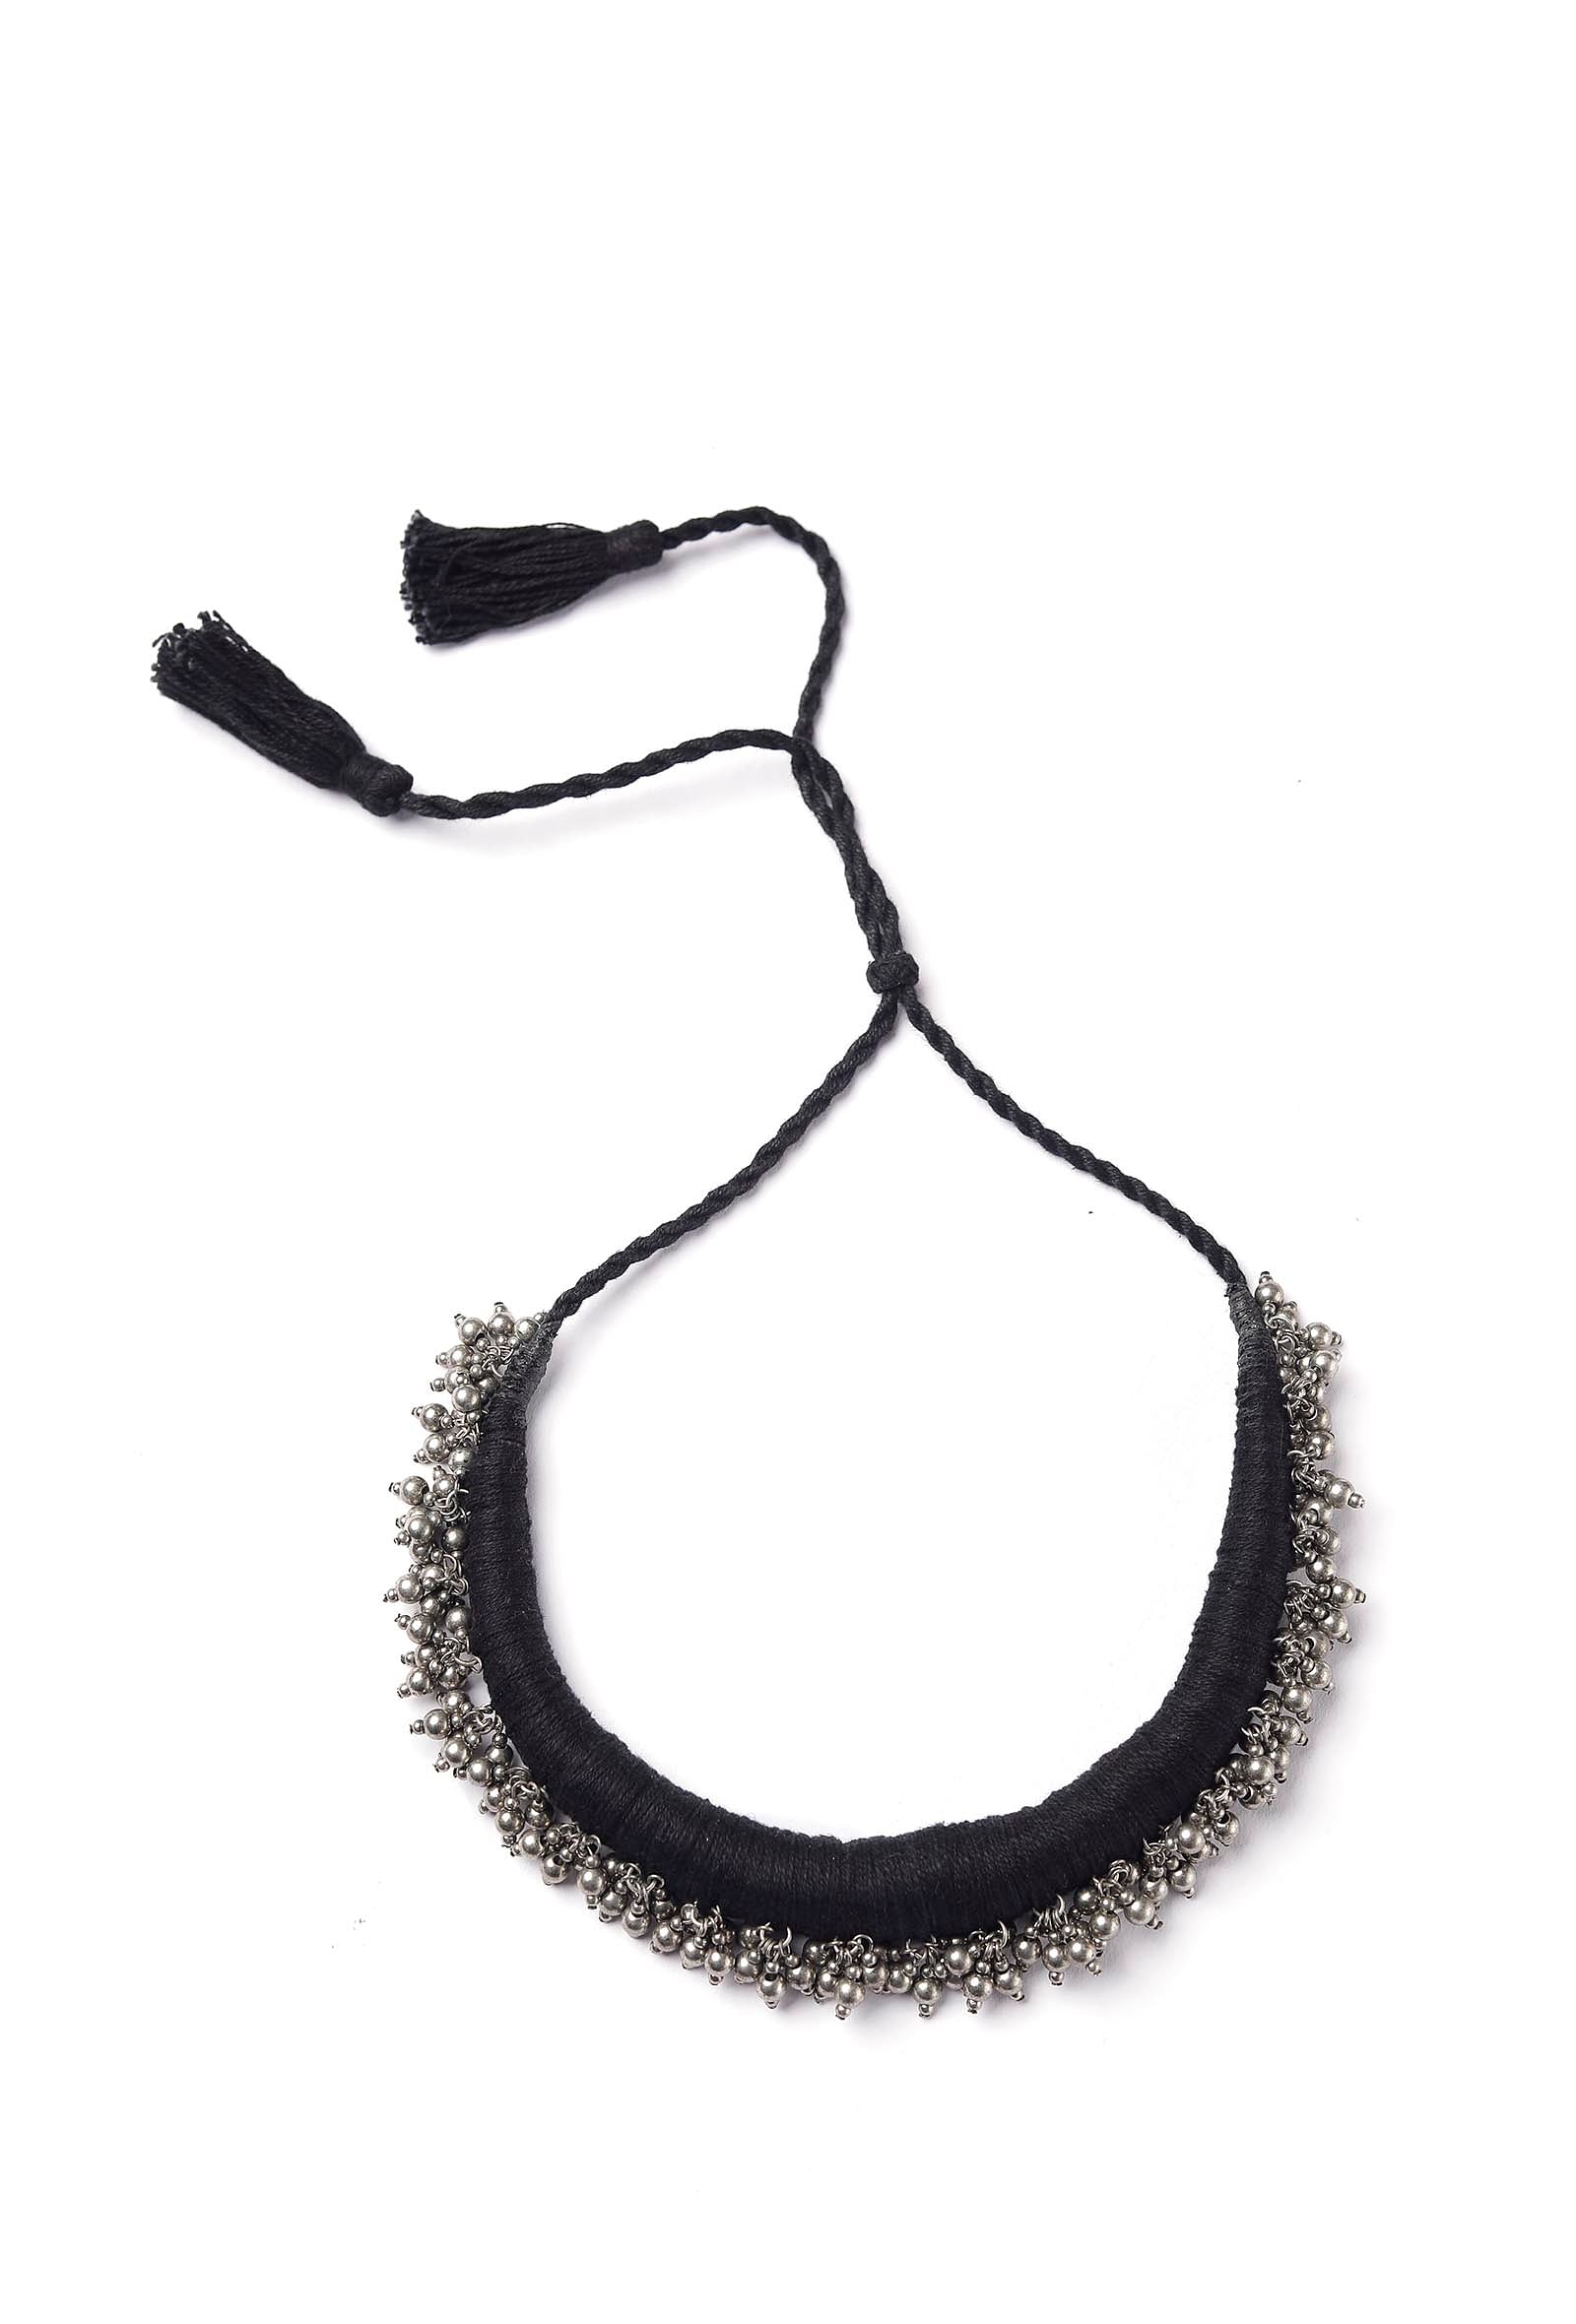 Naghma Black Tribal Ghungroo Necklace